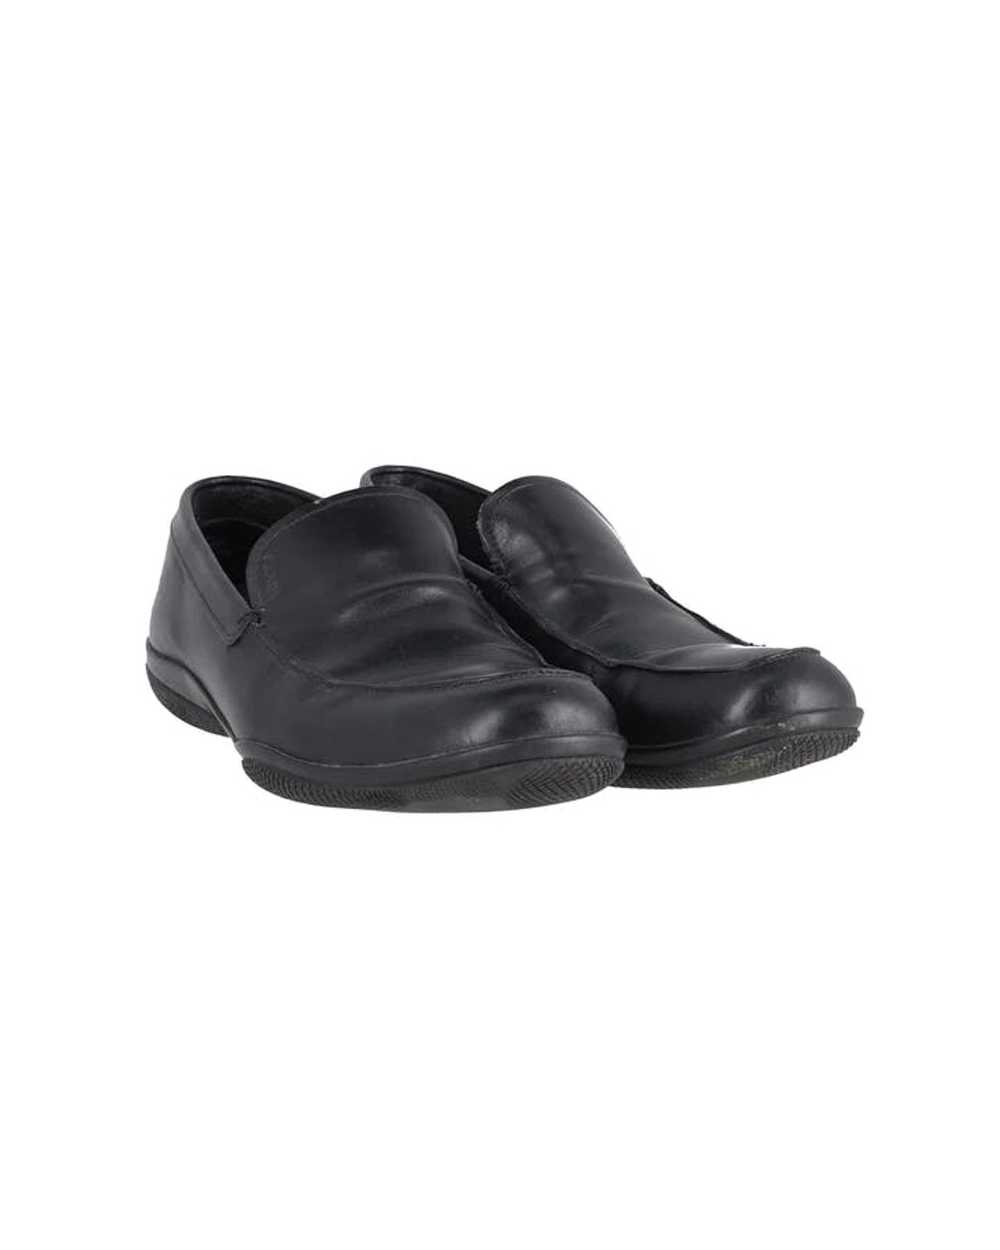 Prada o1b1f11ly0723 Loafers in Black - image 3